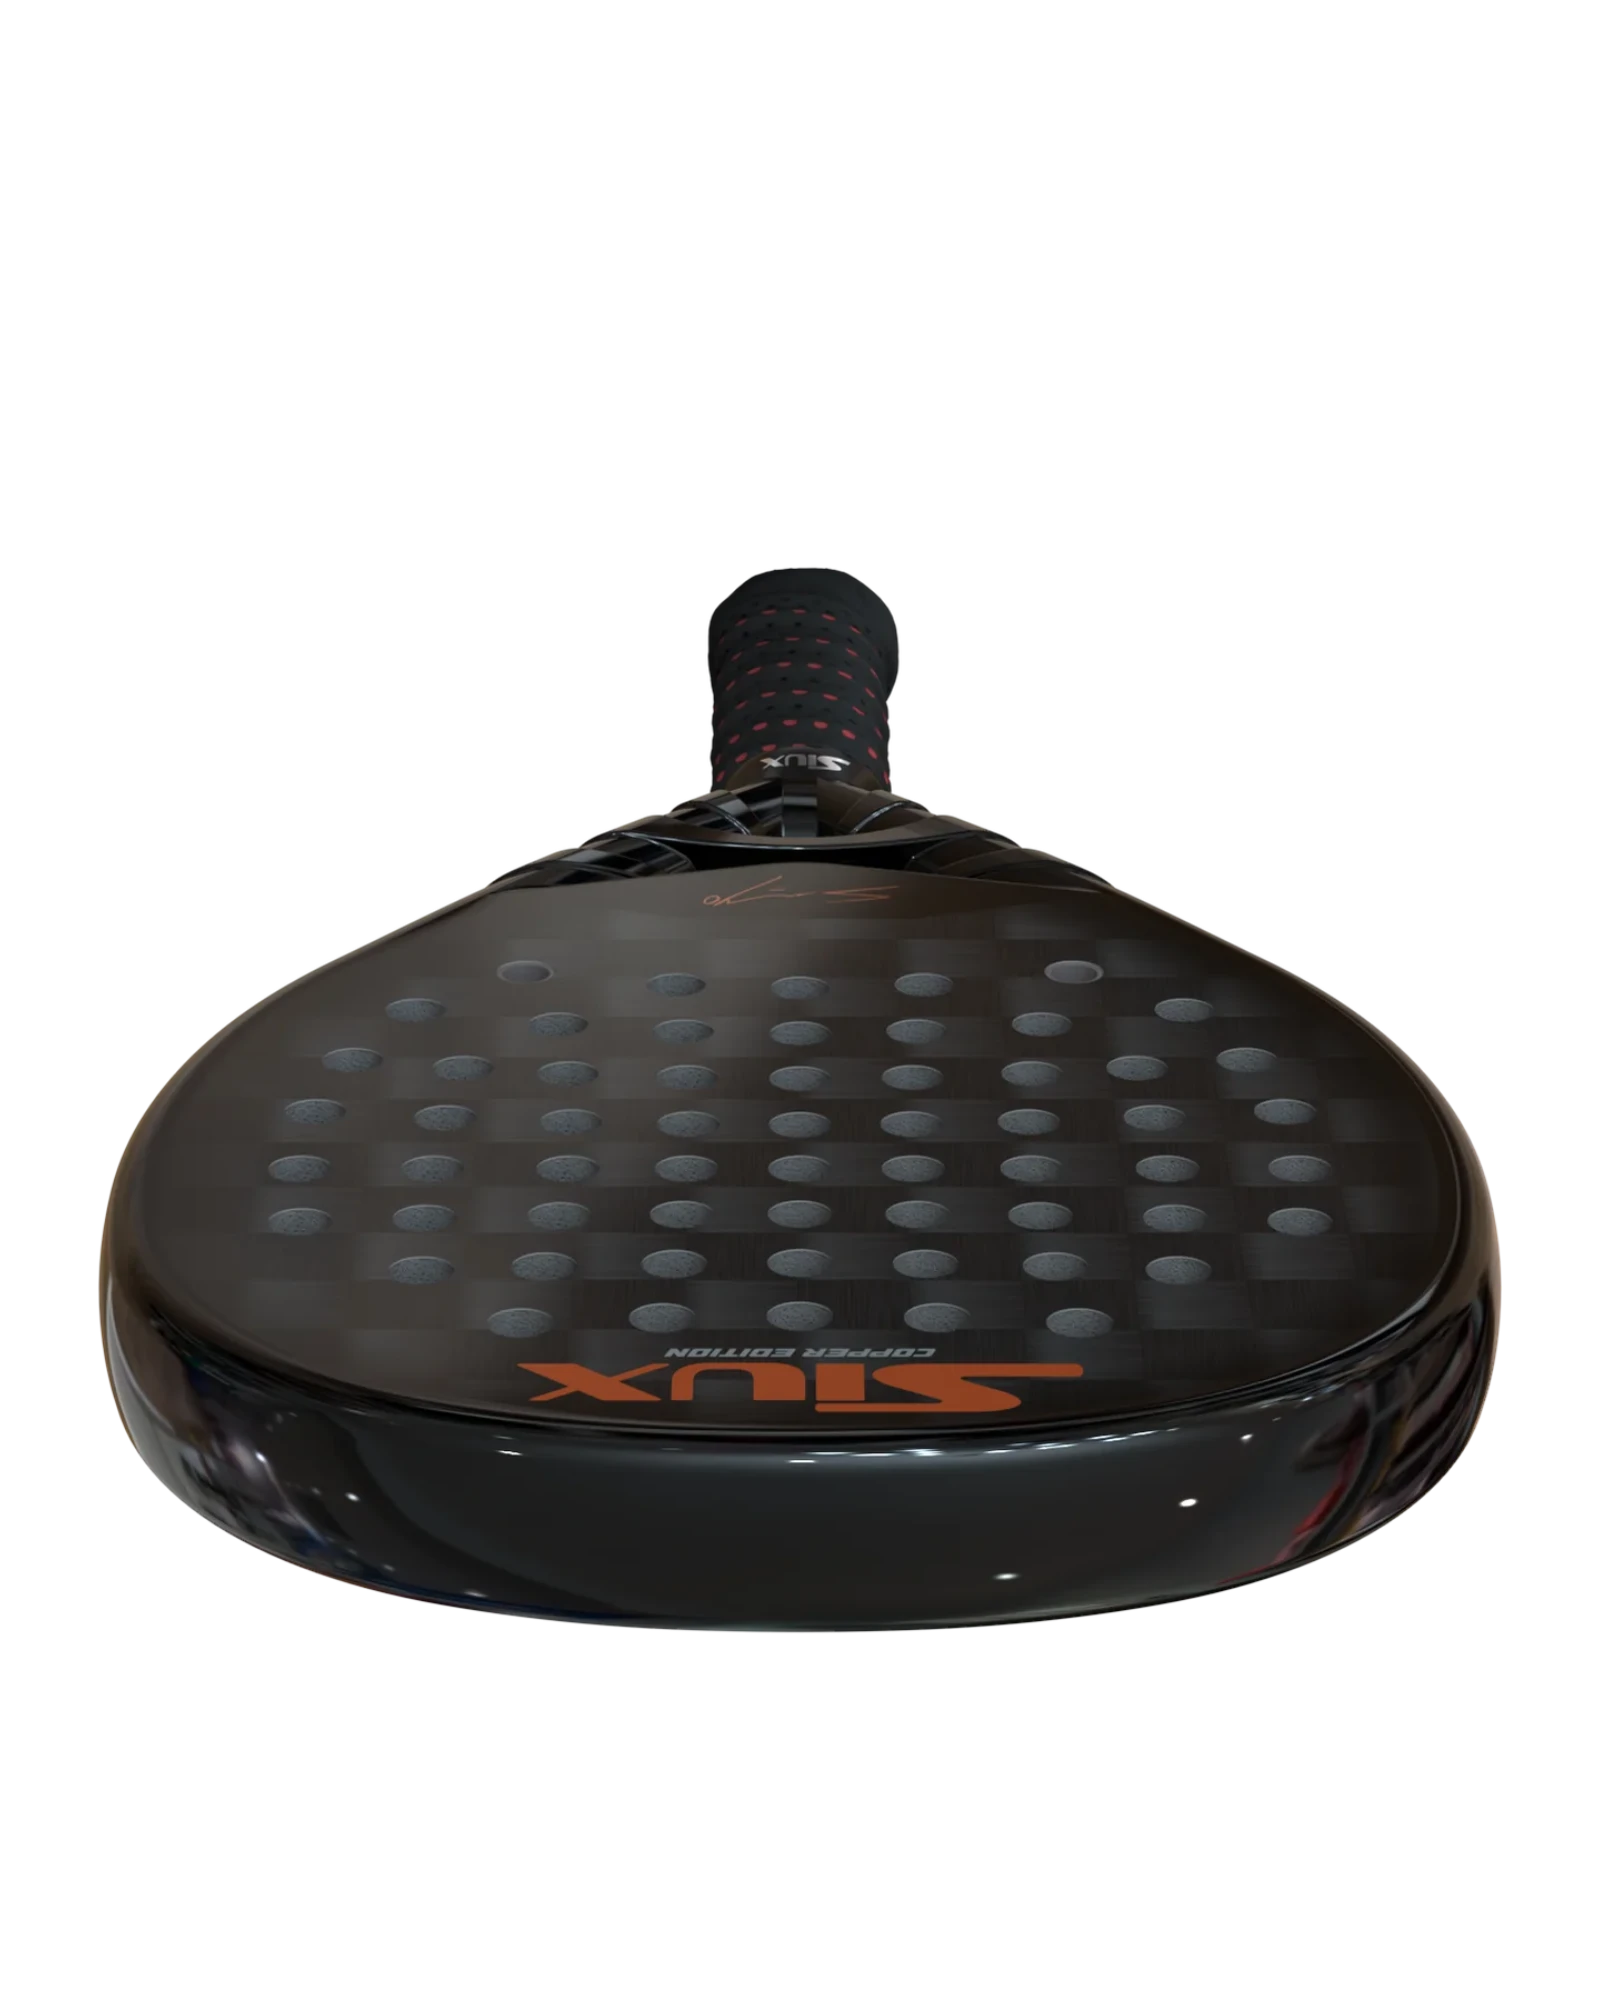 The Siux SG Copper Edition 18k Padel Racket